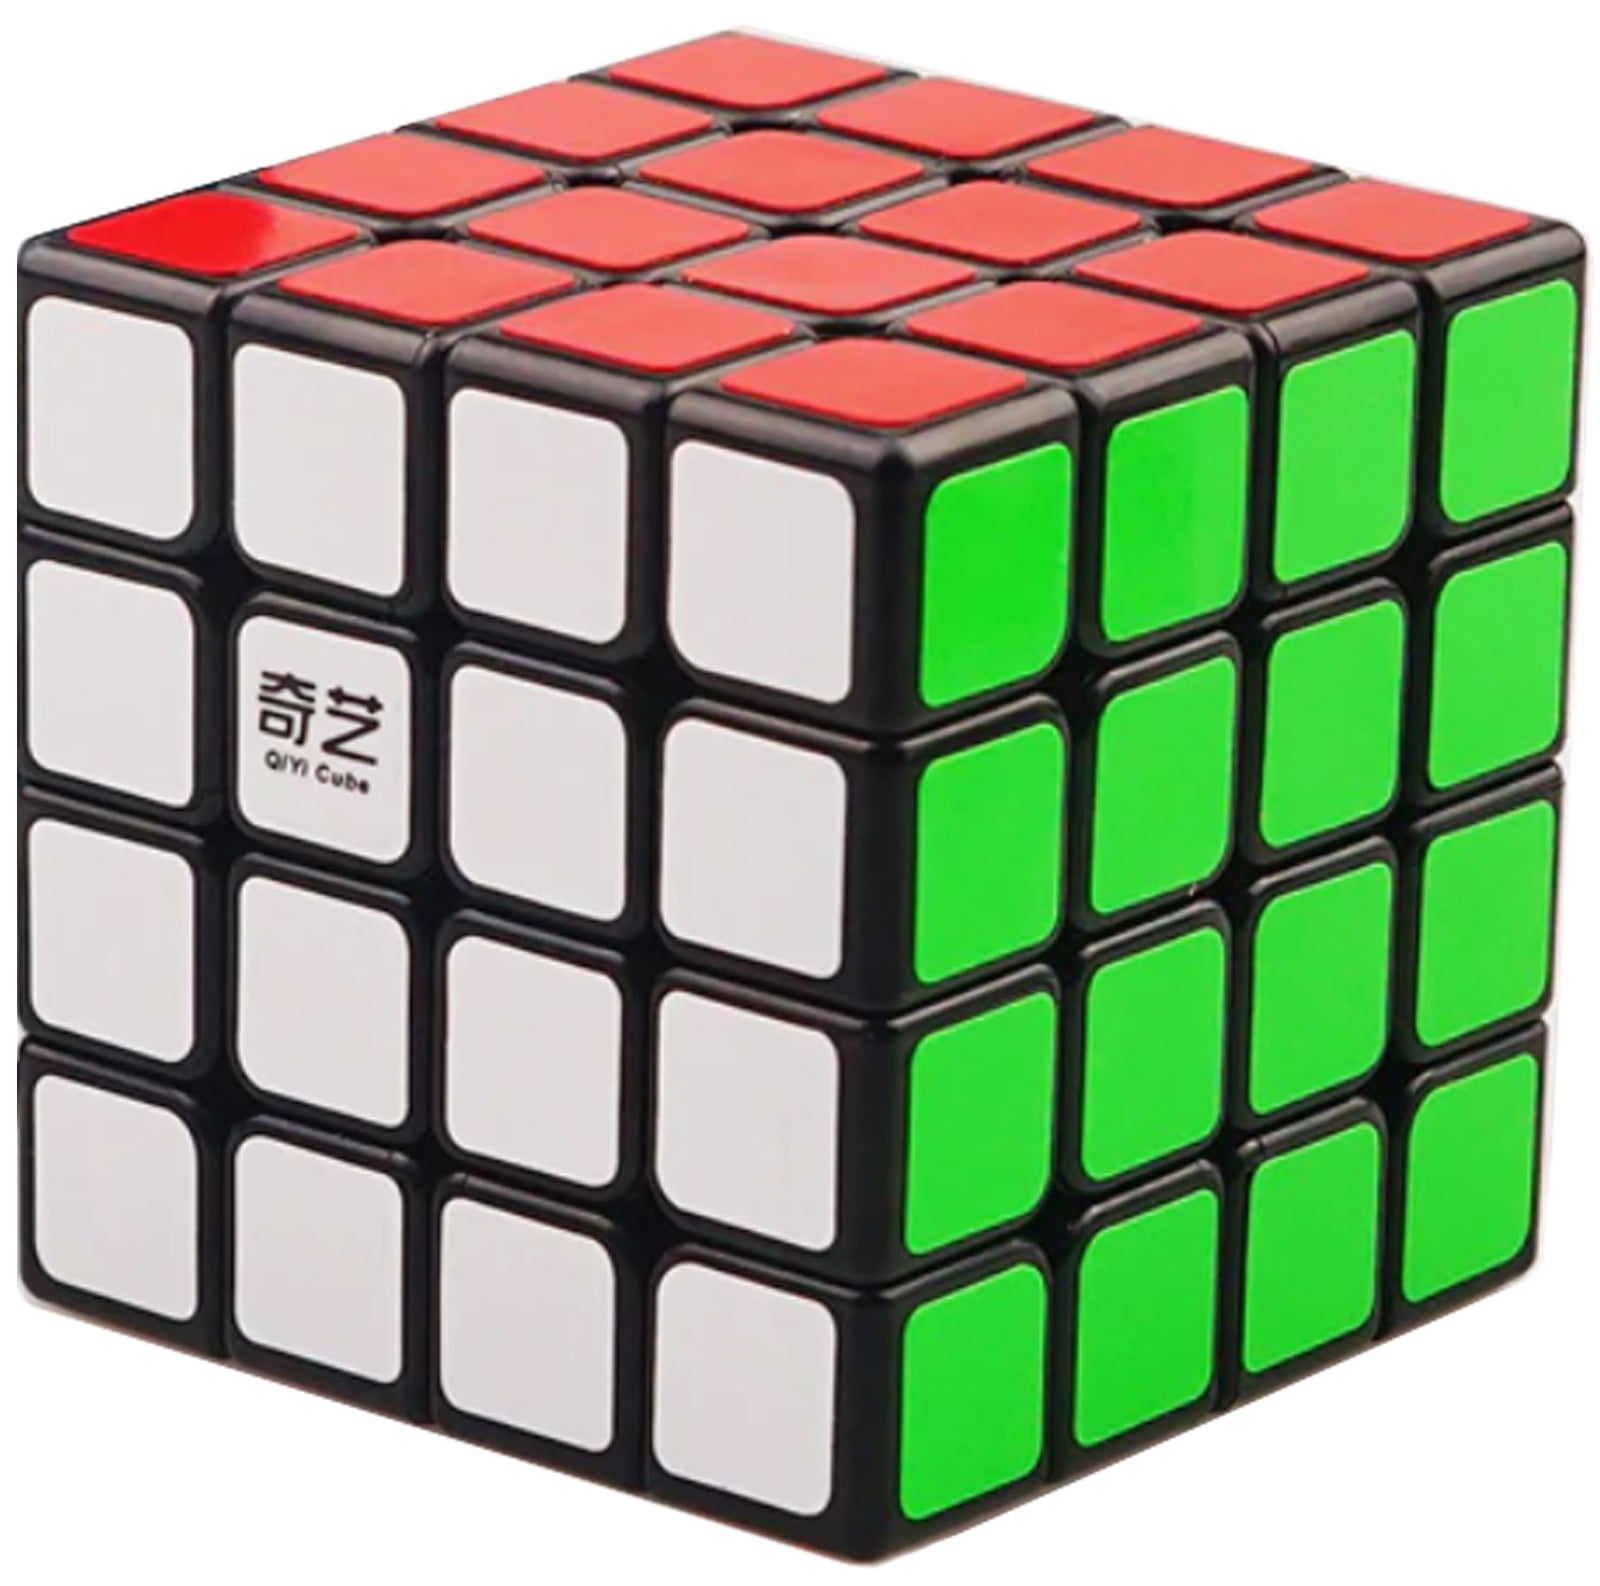 2019 Speed Cube QiYi Magic Cube 4x4x4 Stickerless Magic Puzzle Game Kids Toy Hot 